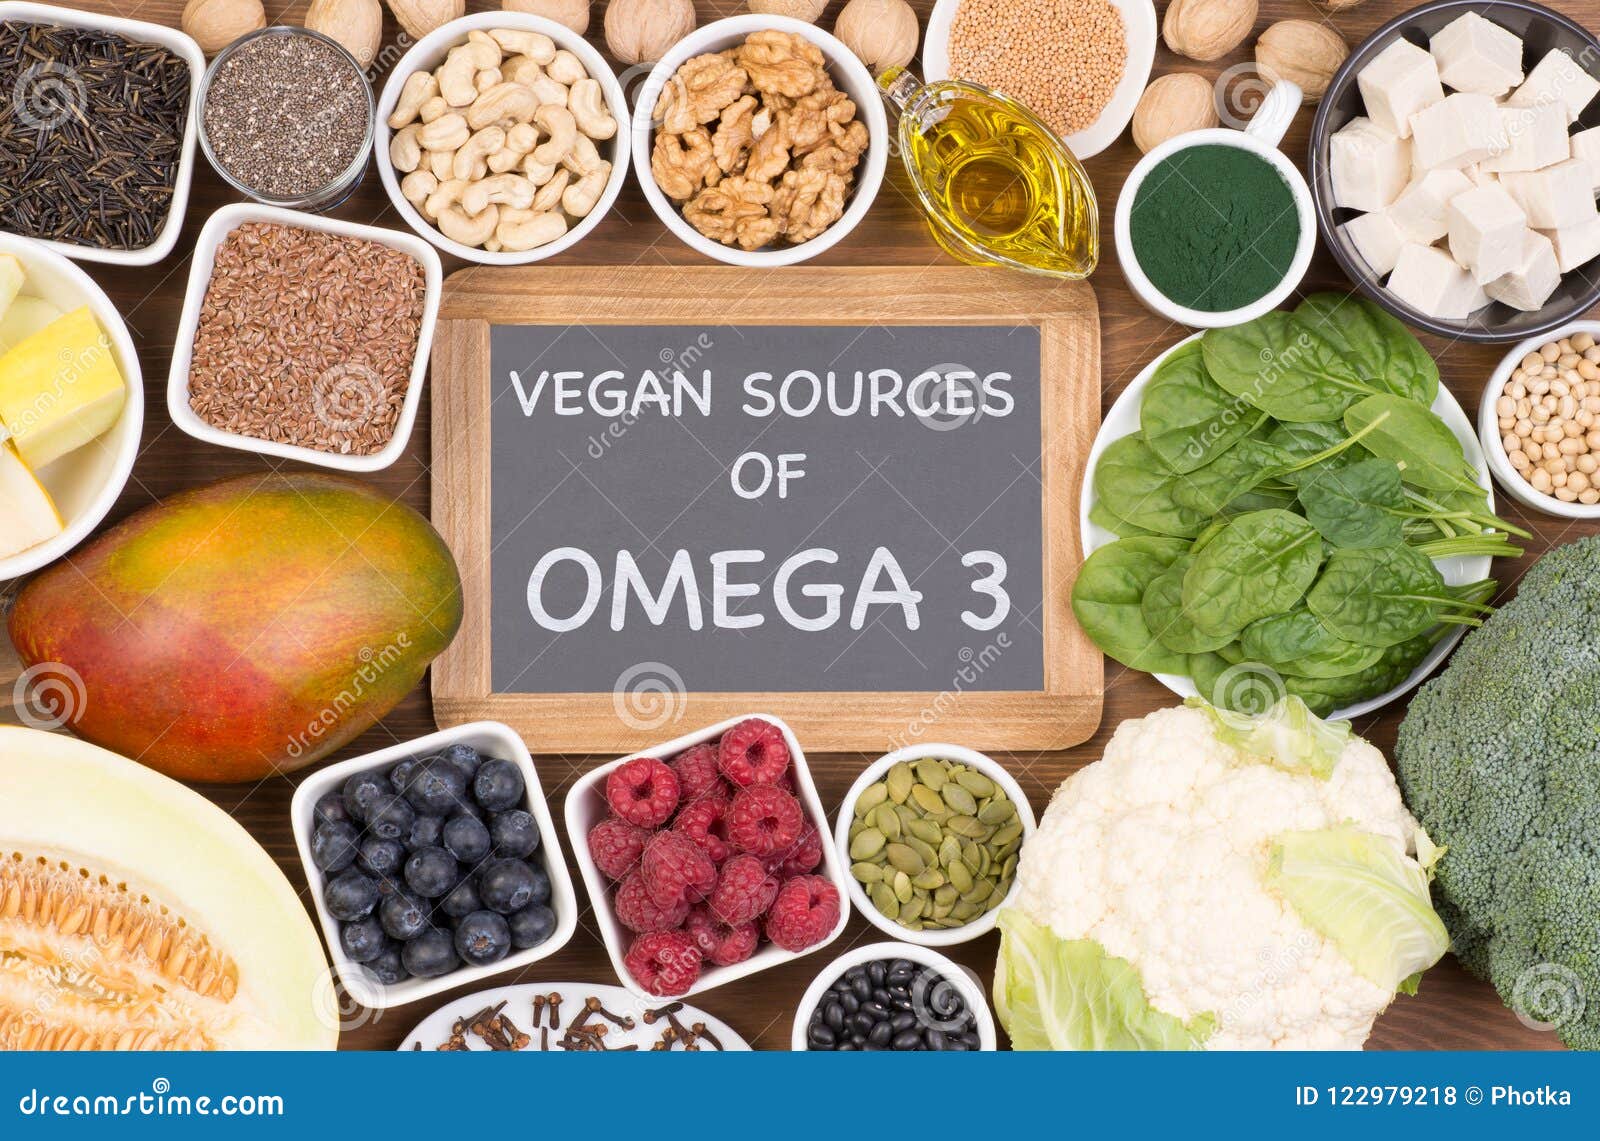 omega 3 foods vegan